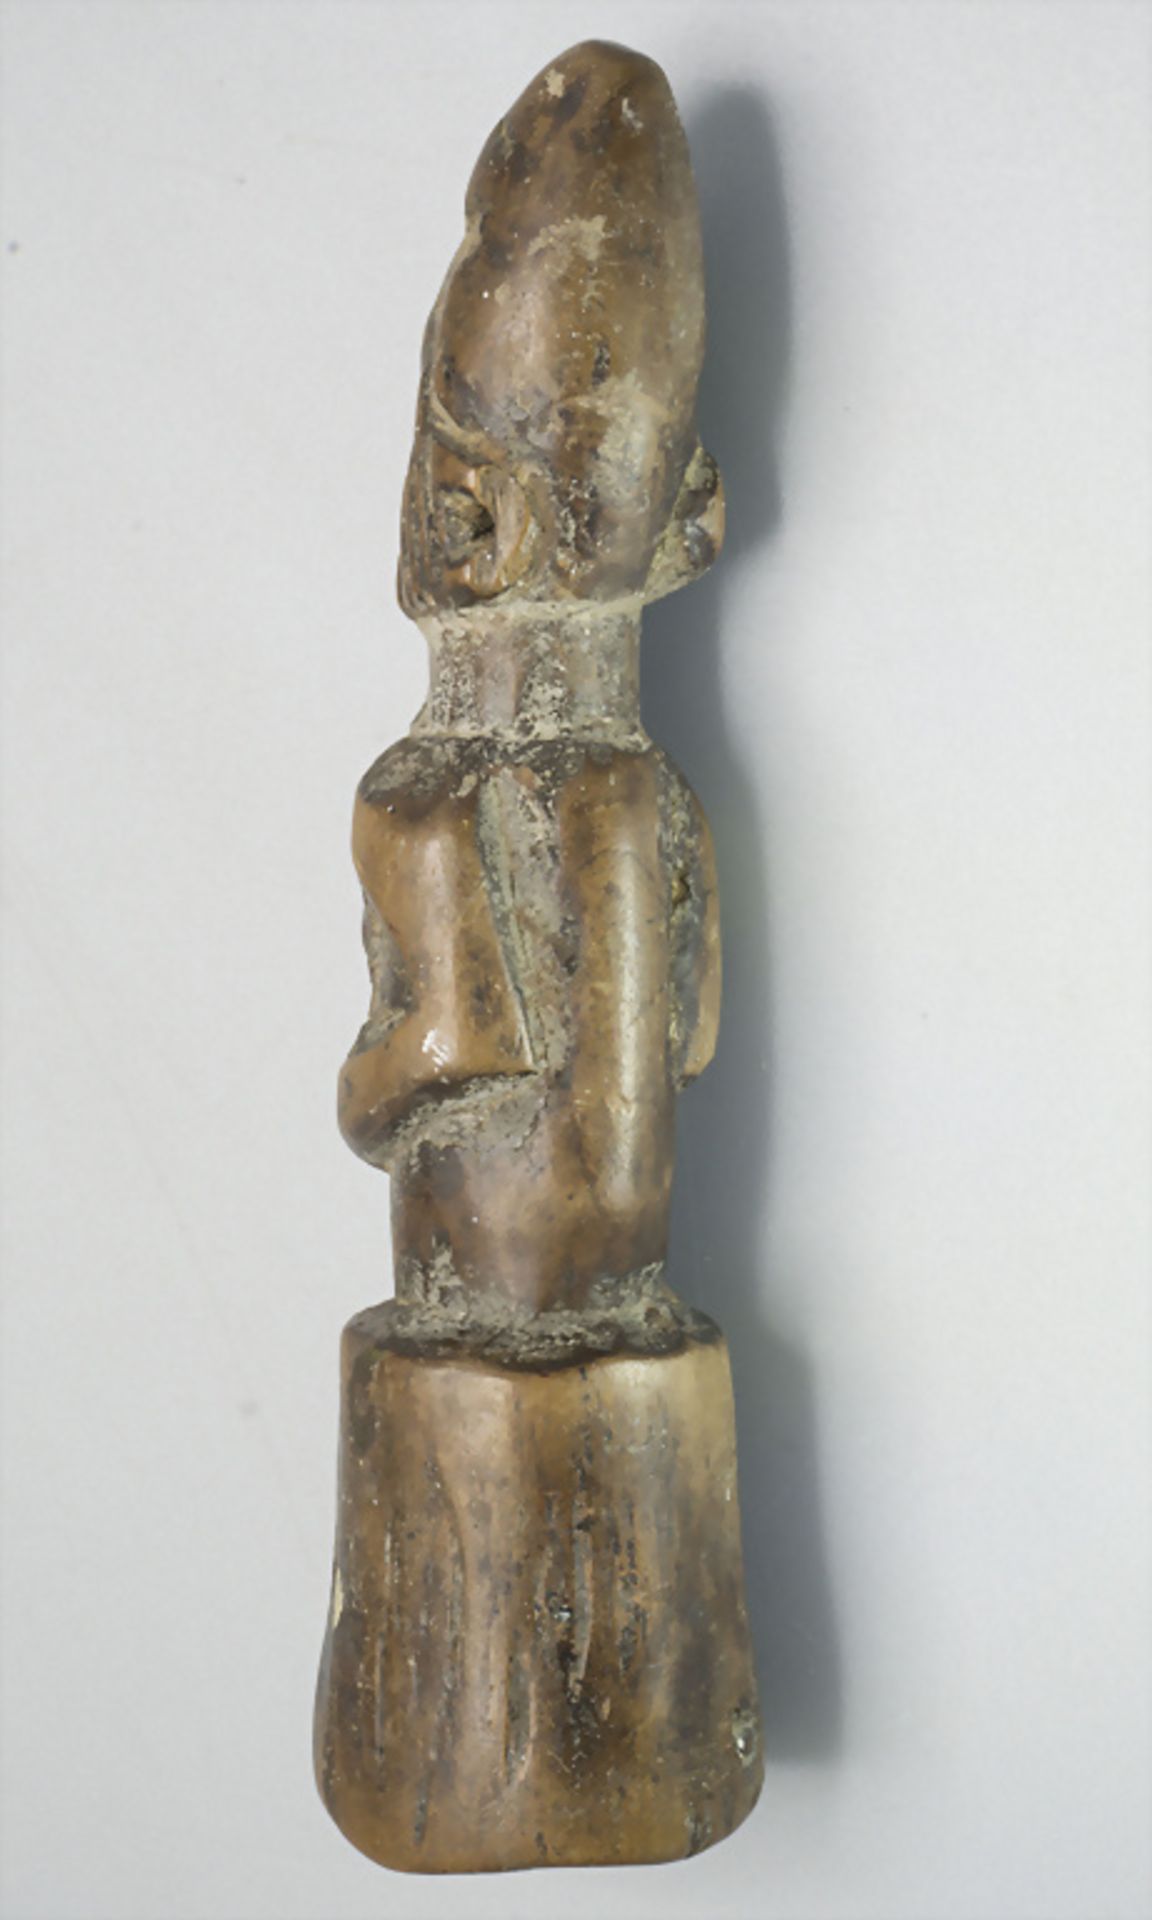 Zwillingsfigur 'Ere Ibedji' / A twin figure 'Ere Ibedji', Yoruba, Nigeria - Image 2 of 2